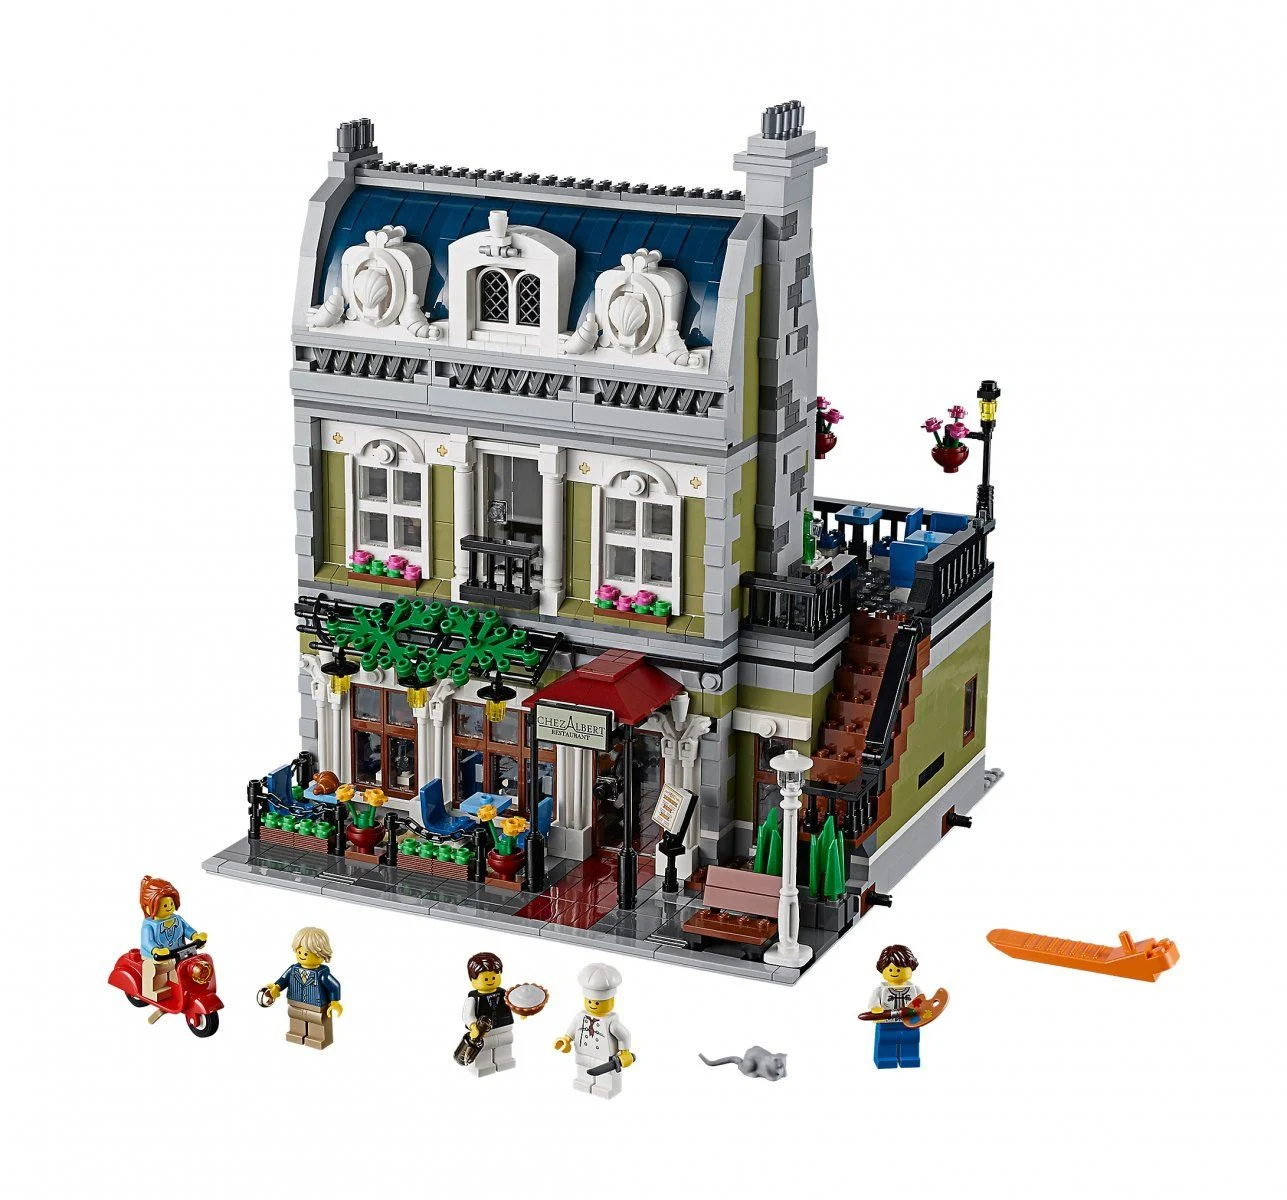 LEGO Creator Expert Parisian Restaurant Modular Buildings